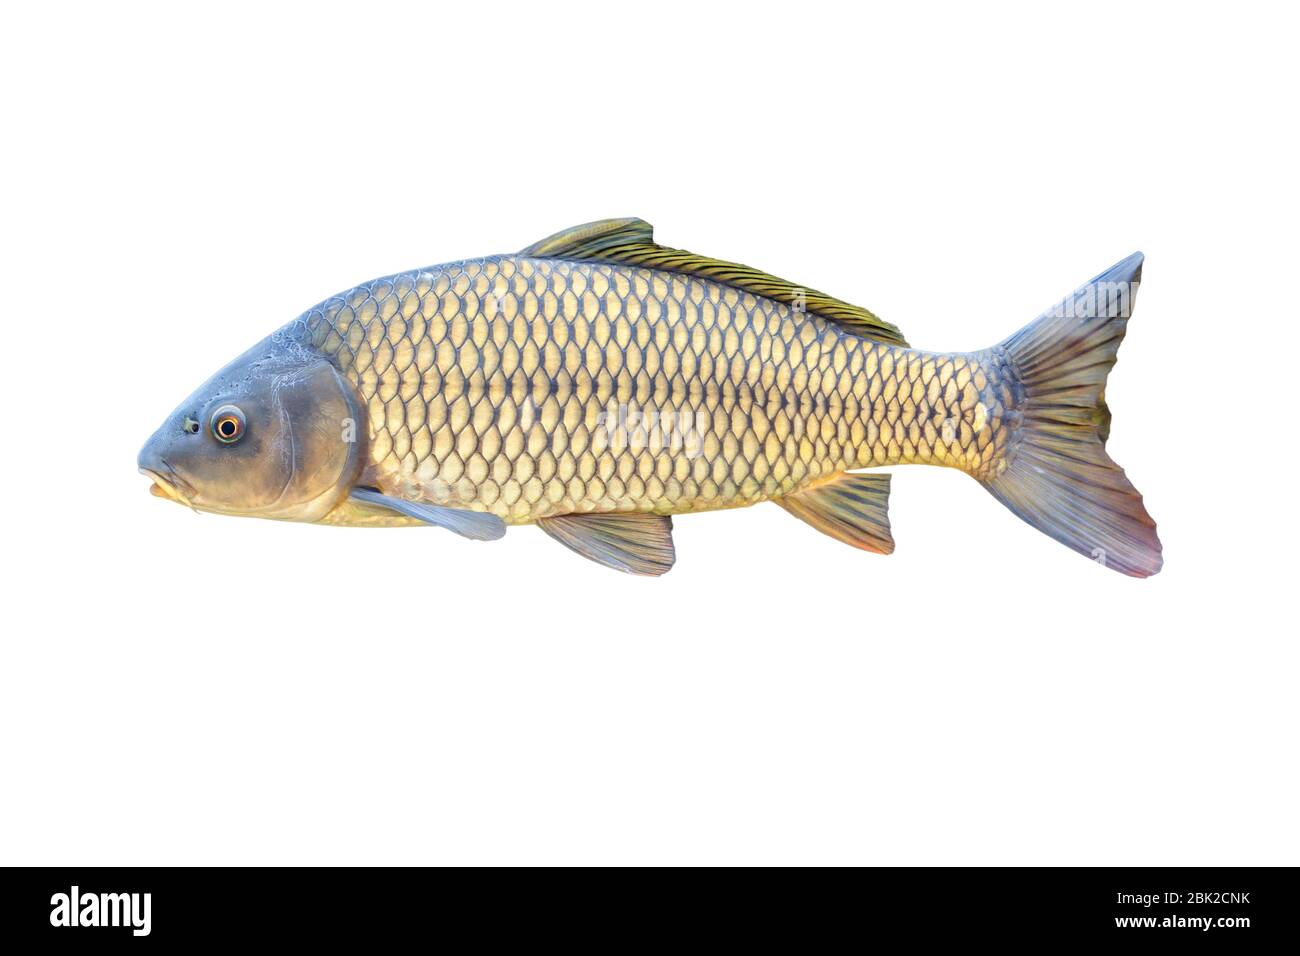 European carp or Cyprinus carpio, a species of freshwater fish. Isolated over white Stock Photo